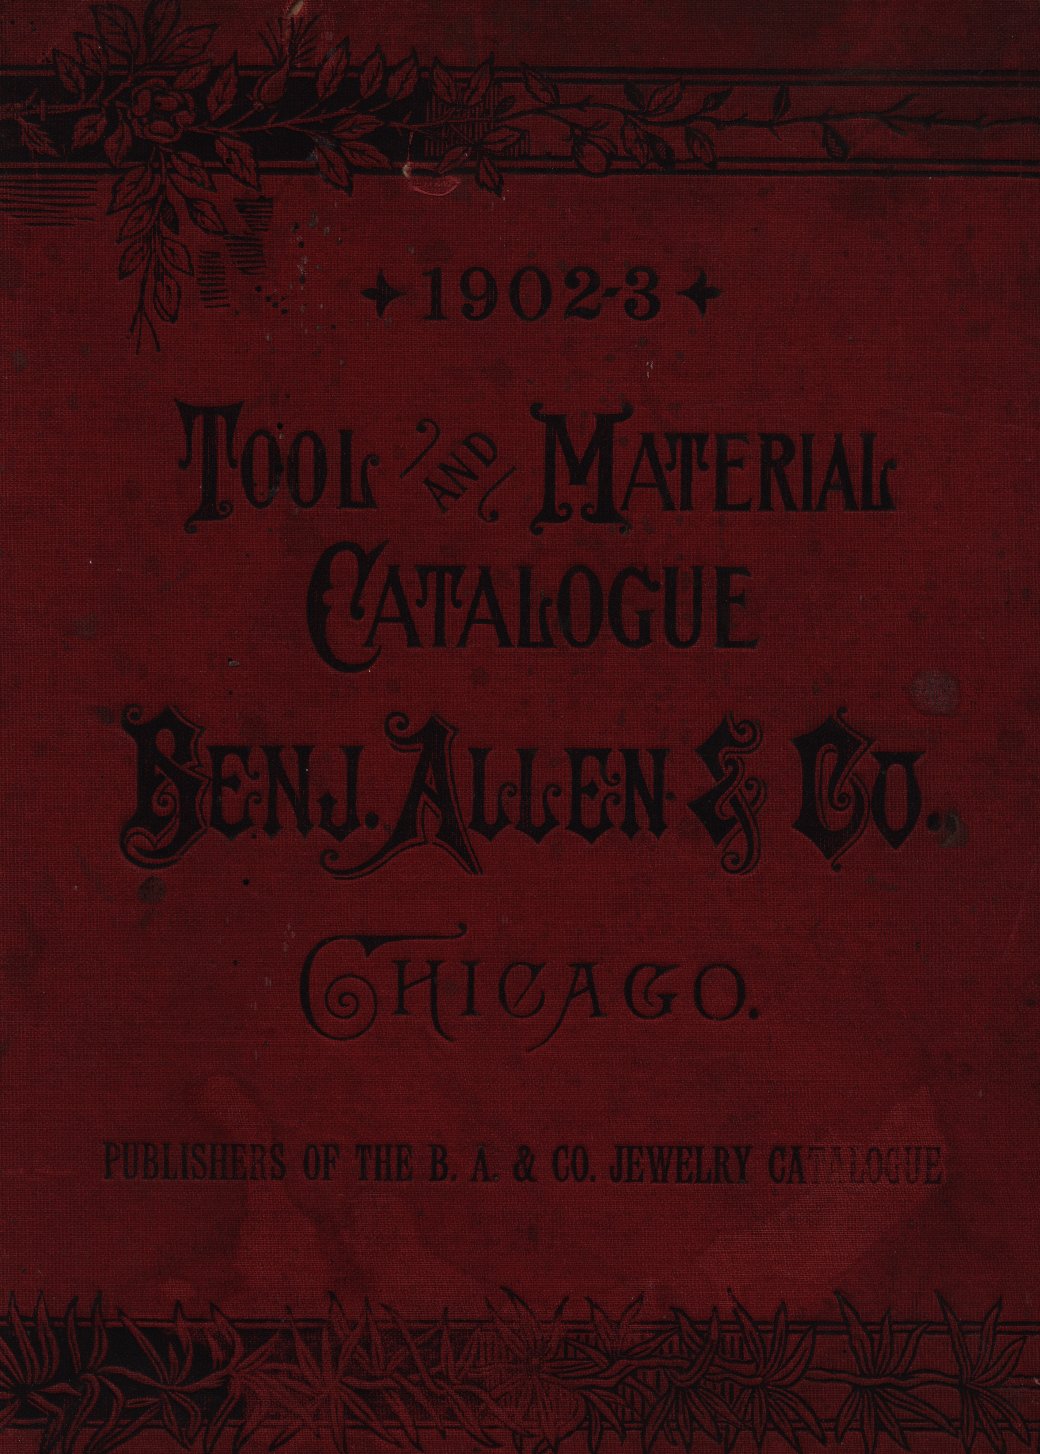 Benj. Allen & Co. Tool & Material Catalog: New York Standard (1902) Cover Image